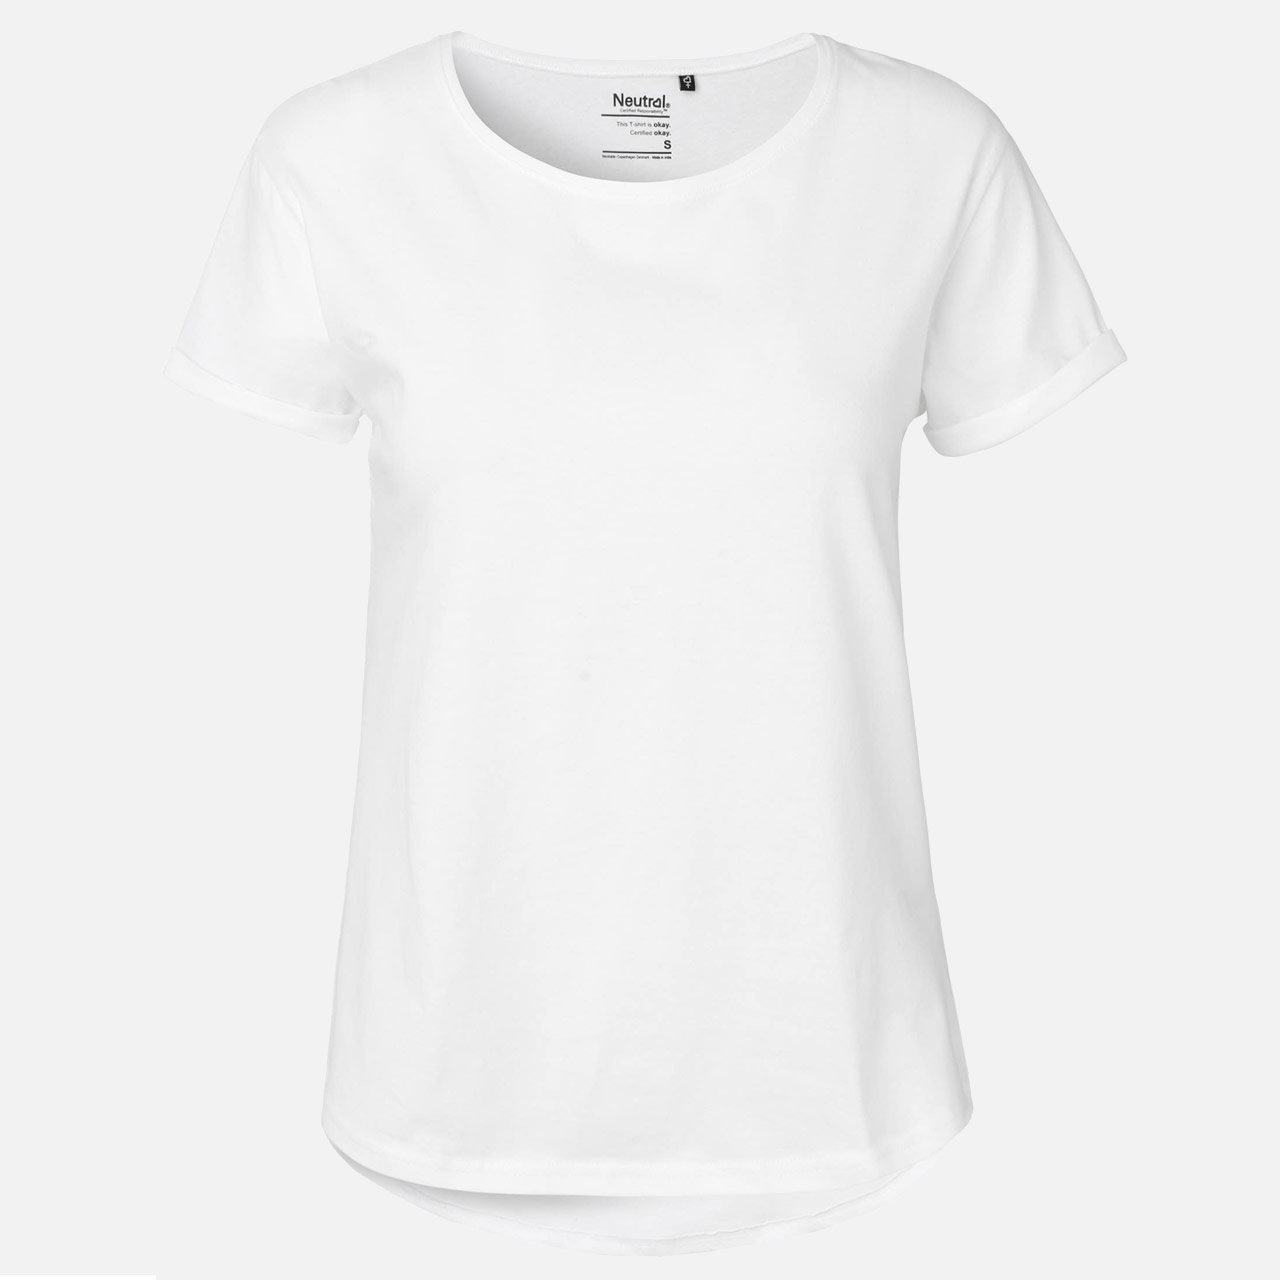 Doppelpack Ladies Roll Up Sleeve T-Shirt - Weiß / Bordeaux XL Weiss / Bordeaux